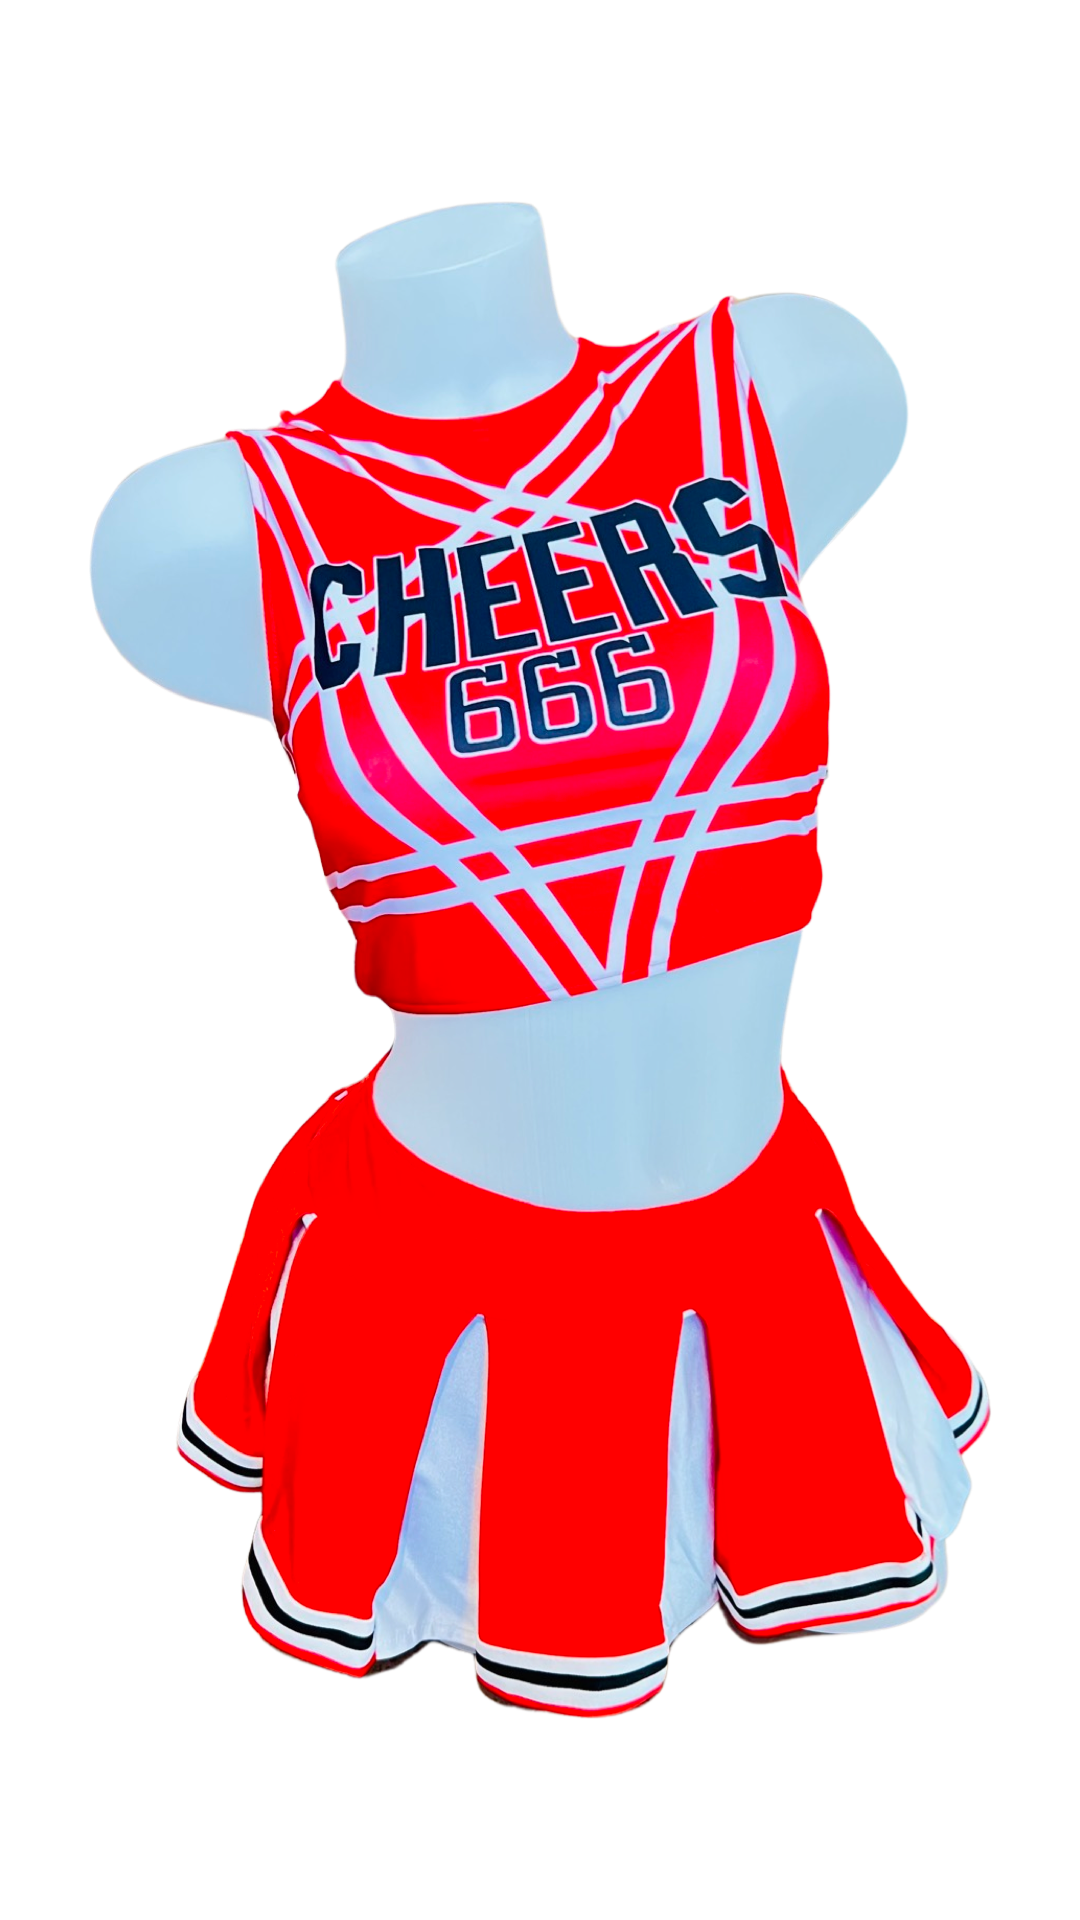 Cheer 666 Cheerleader Costume